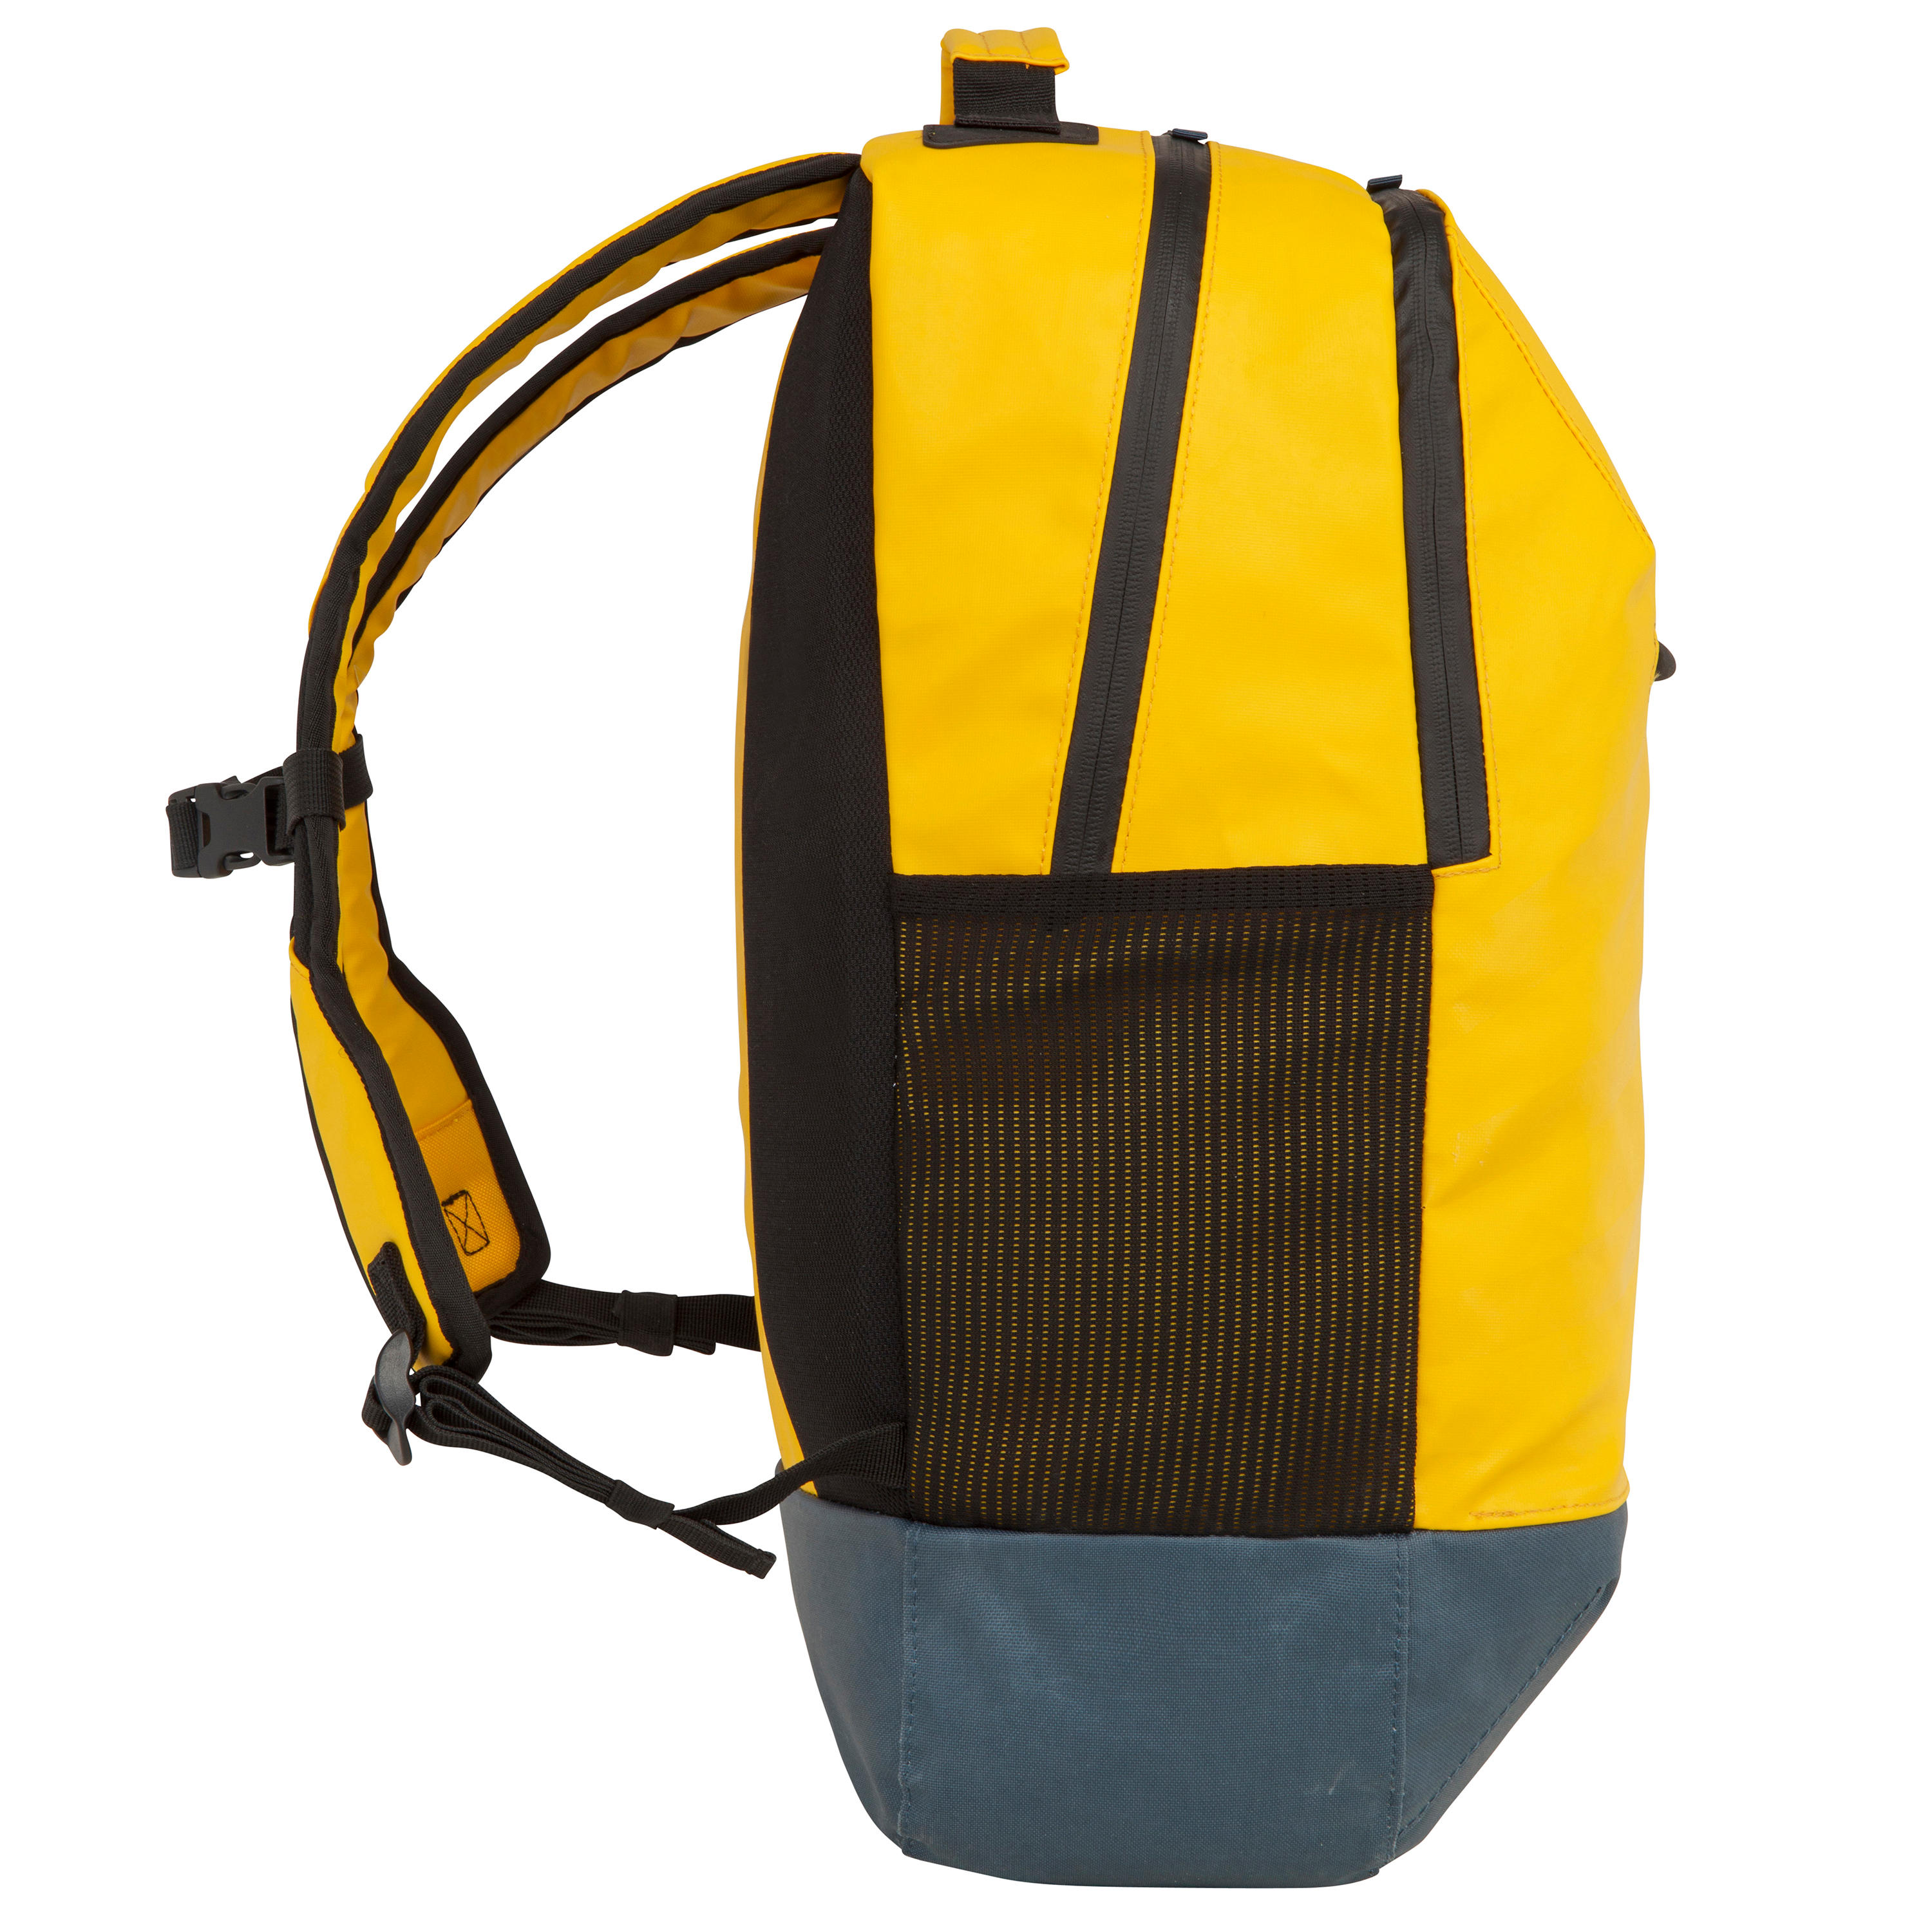 Waterproof backpack 25 litres - Yellow 4/13